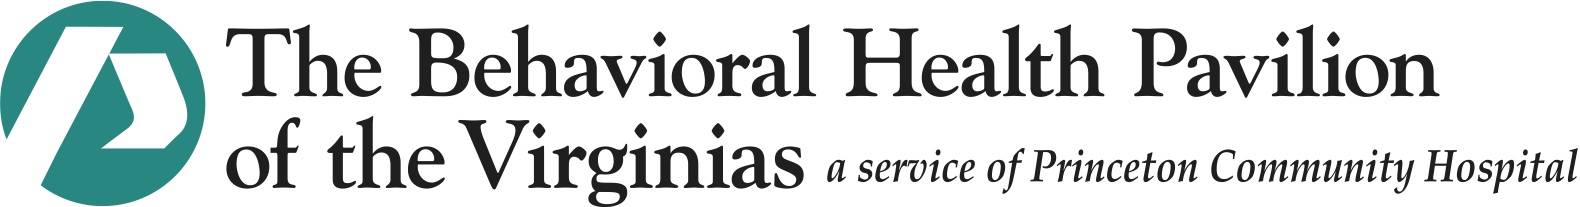 The Behavioral Health Pavilion of the Virginias logo